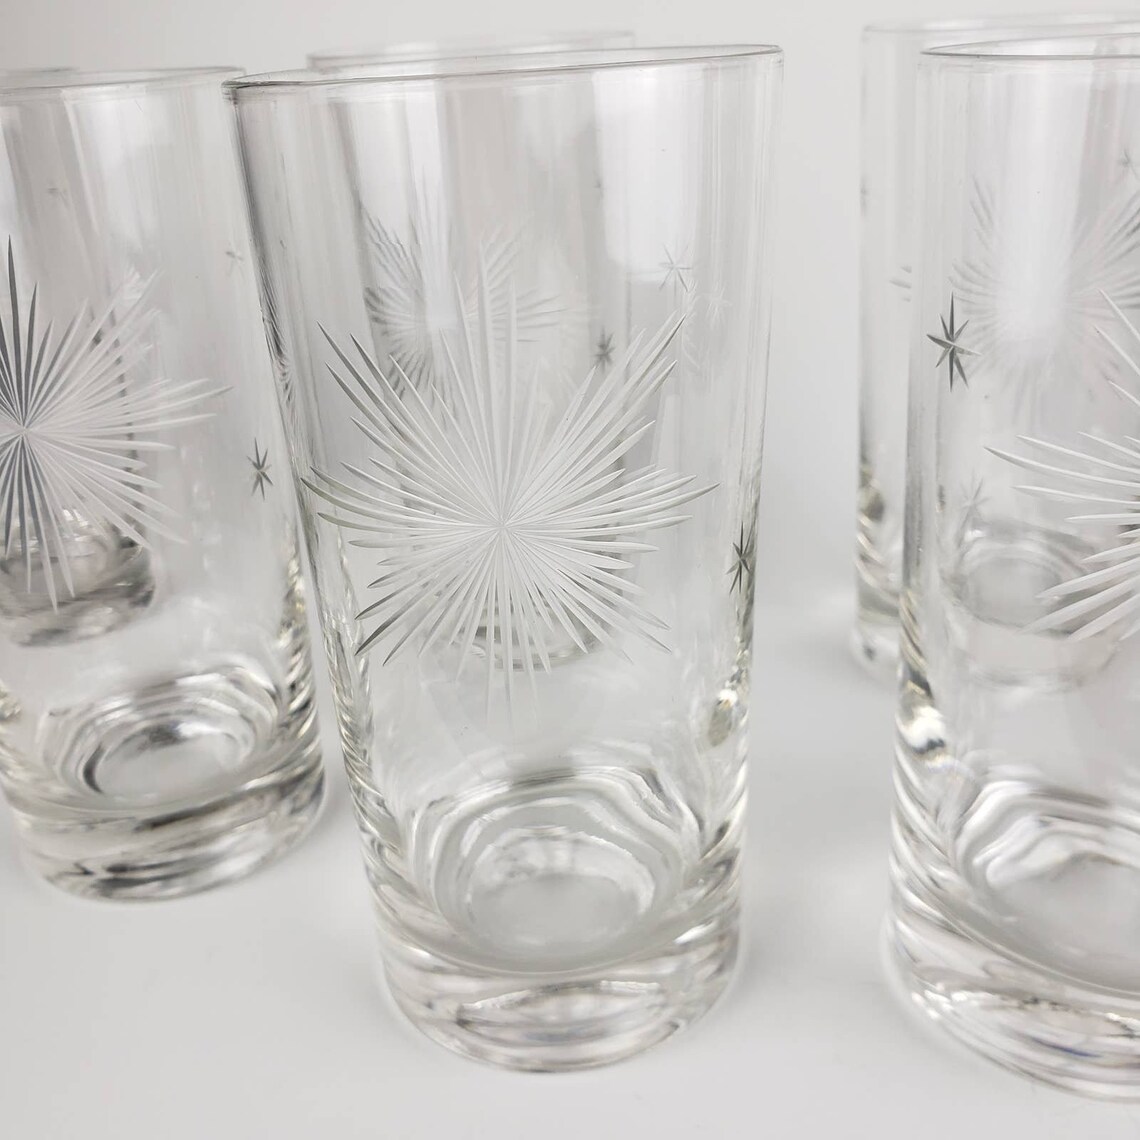 Vintage Starburst Etched Clear Glass Drinking Juice Glasses | Etsy